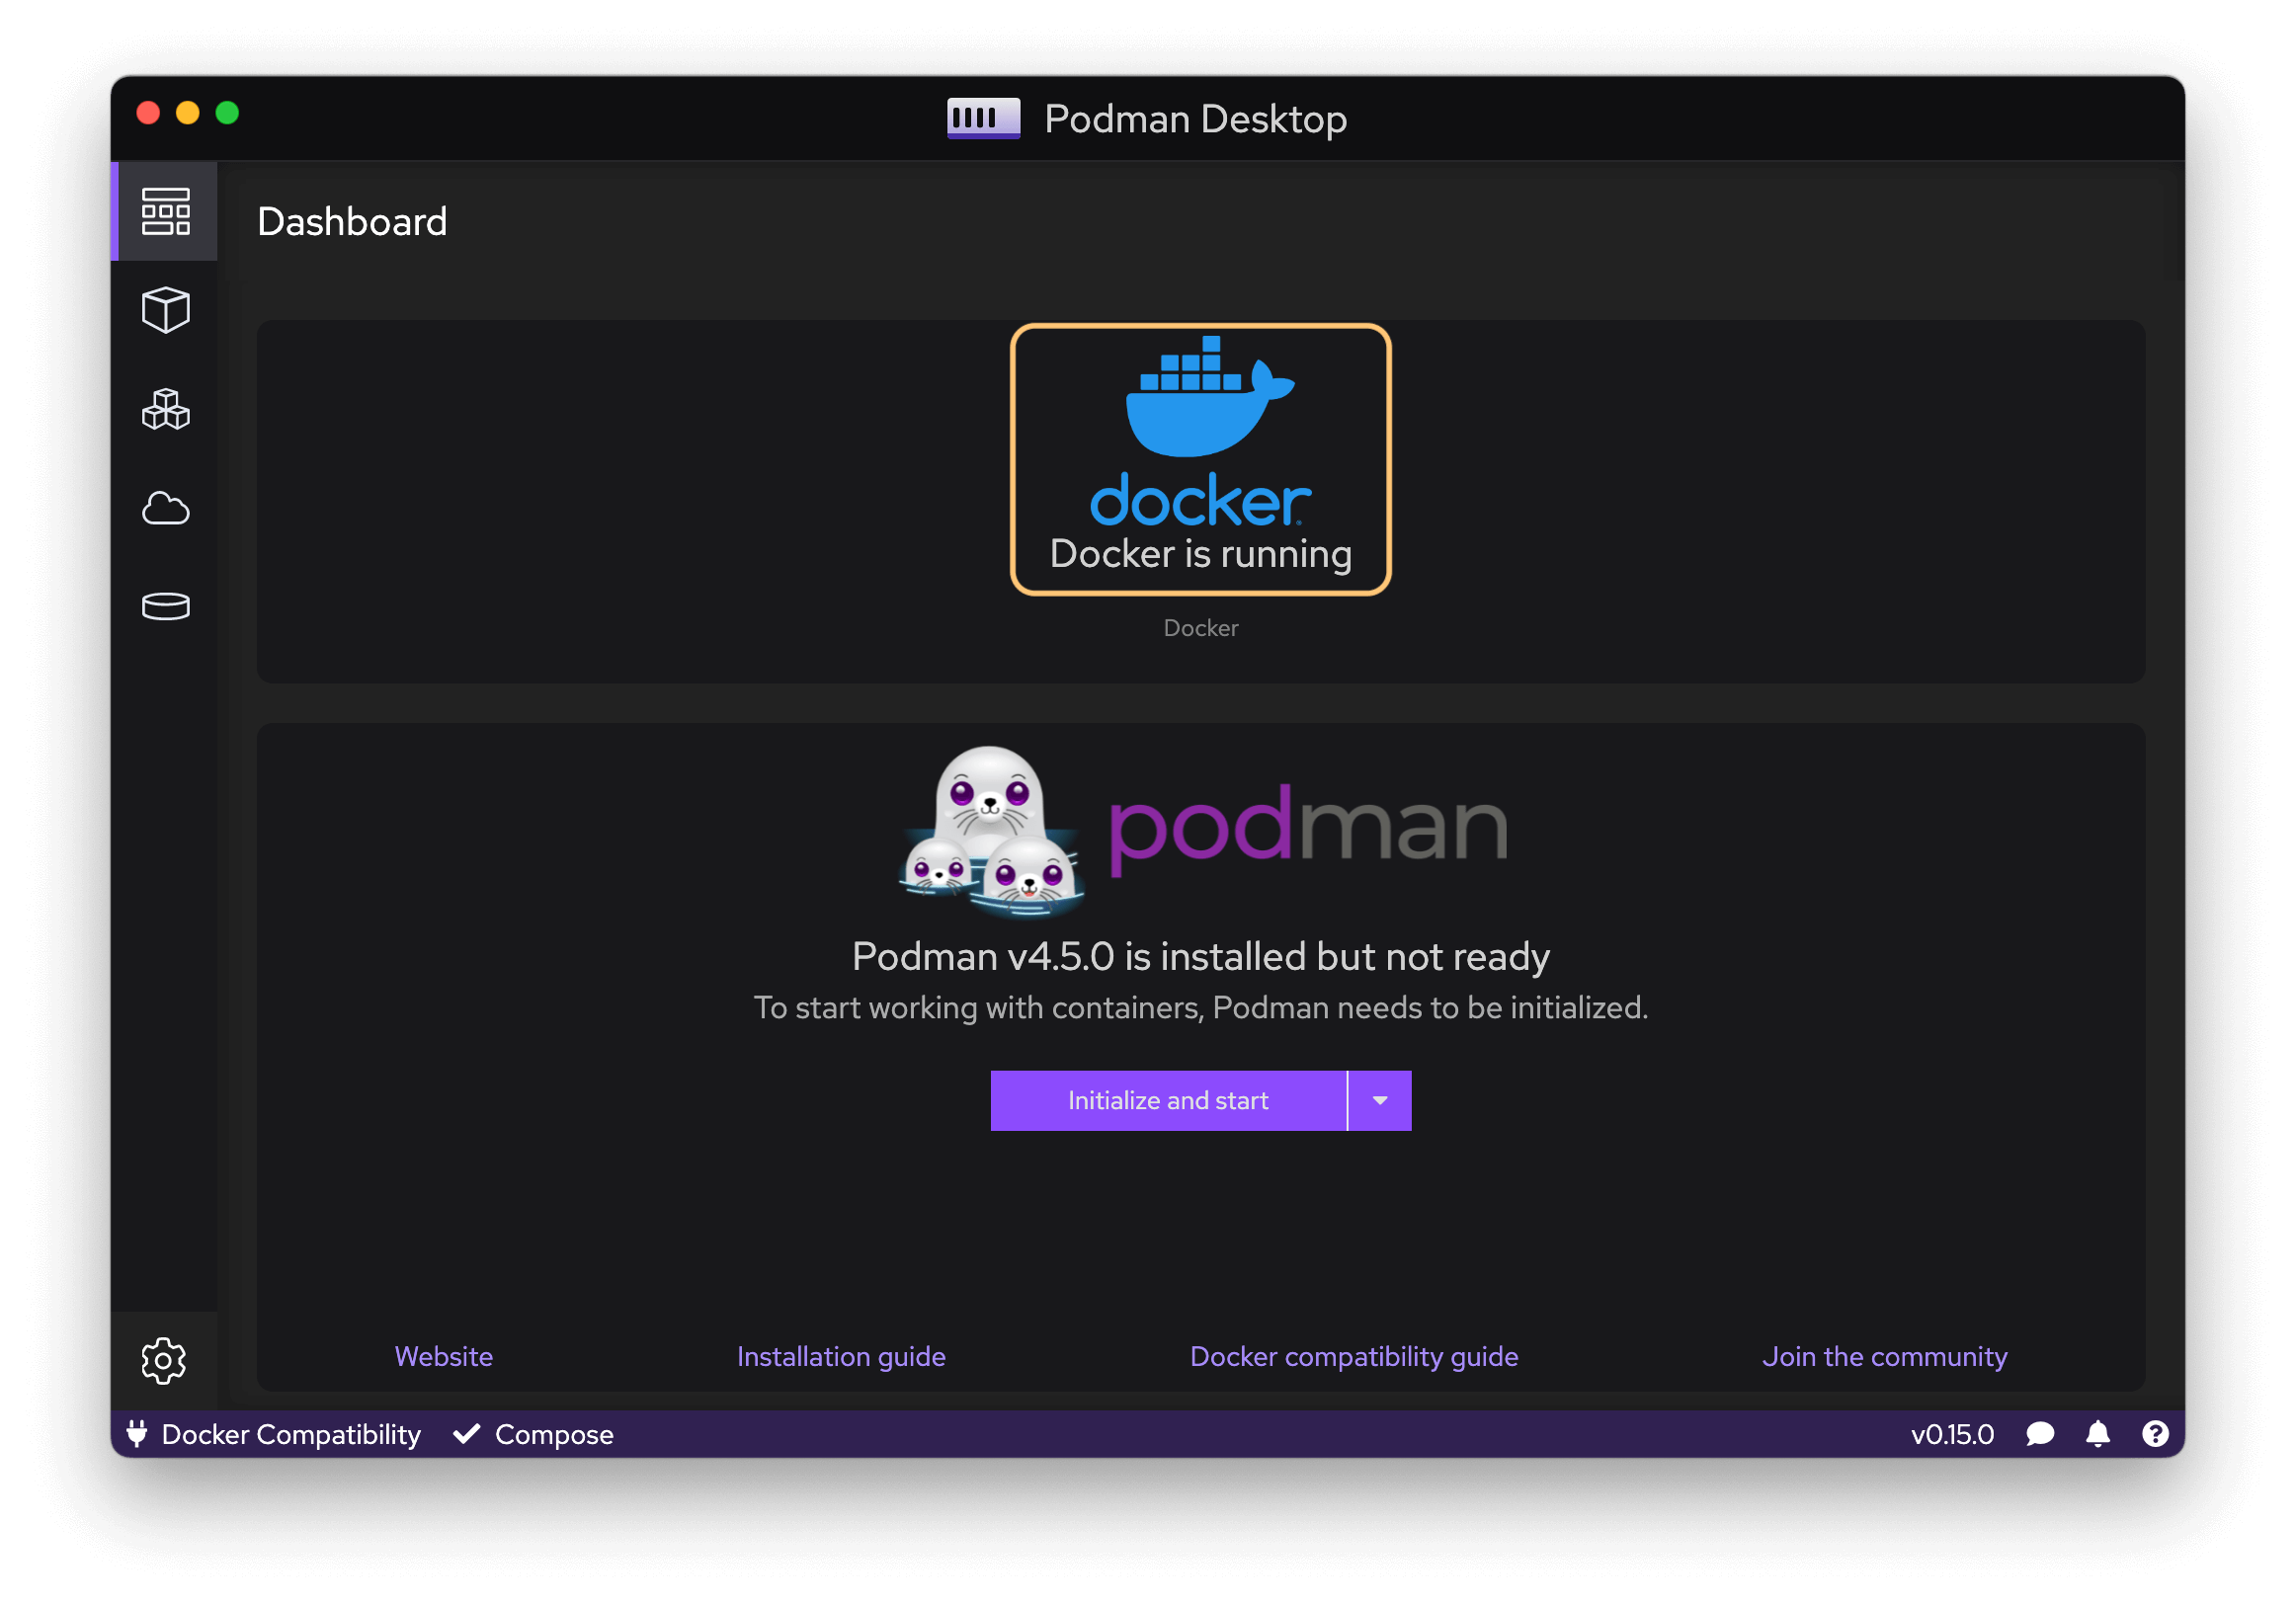 The Podman Desktop Dashboard shows whether Docker is running.